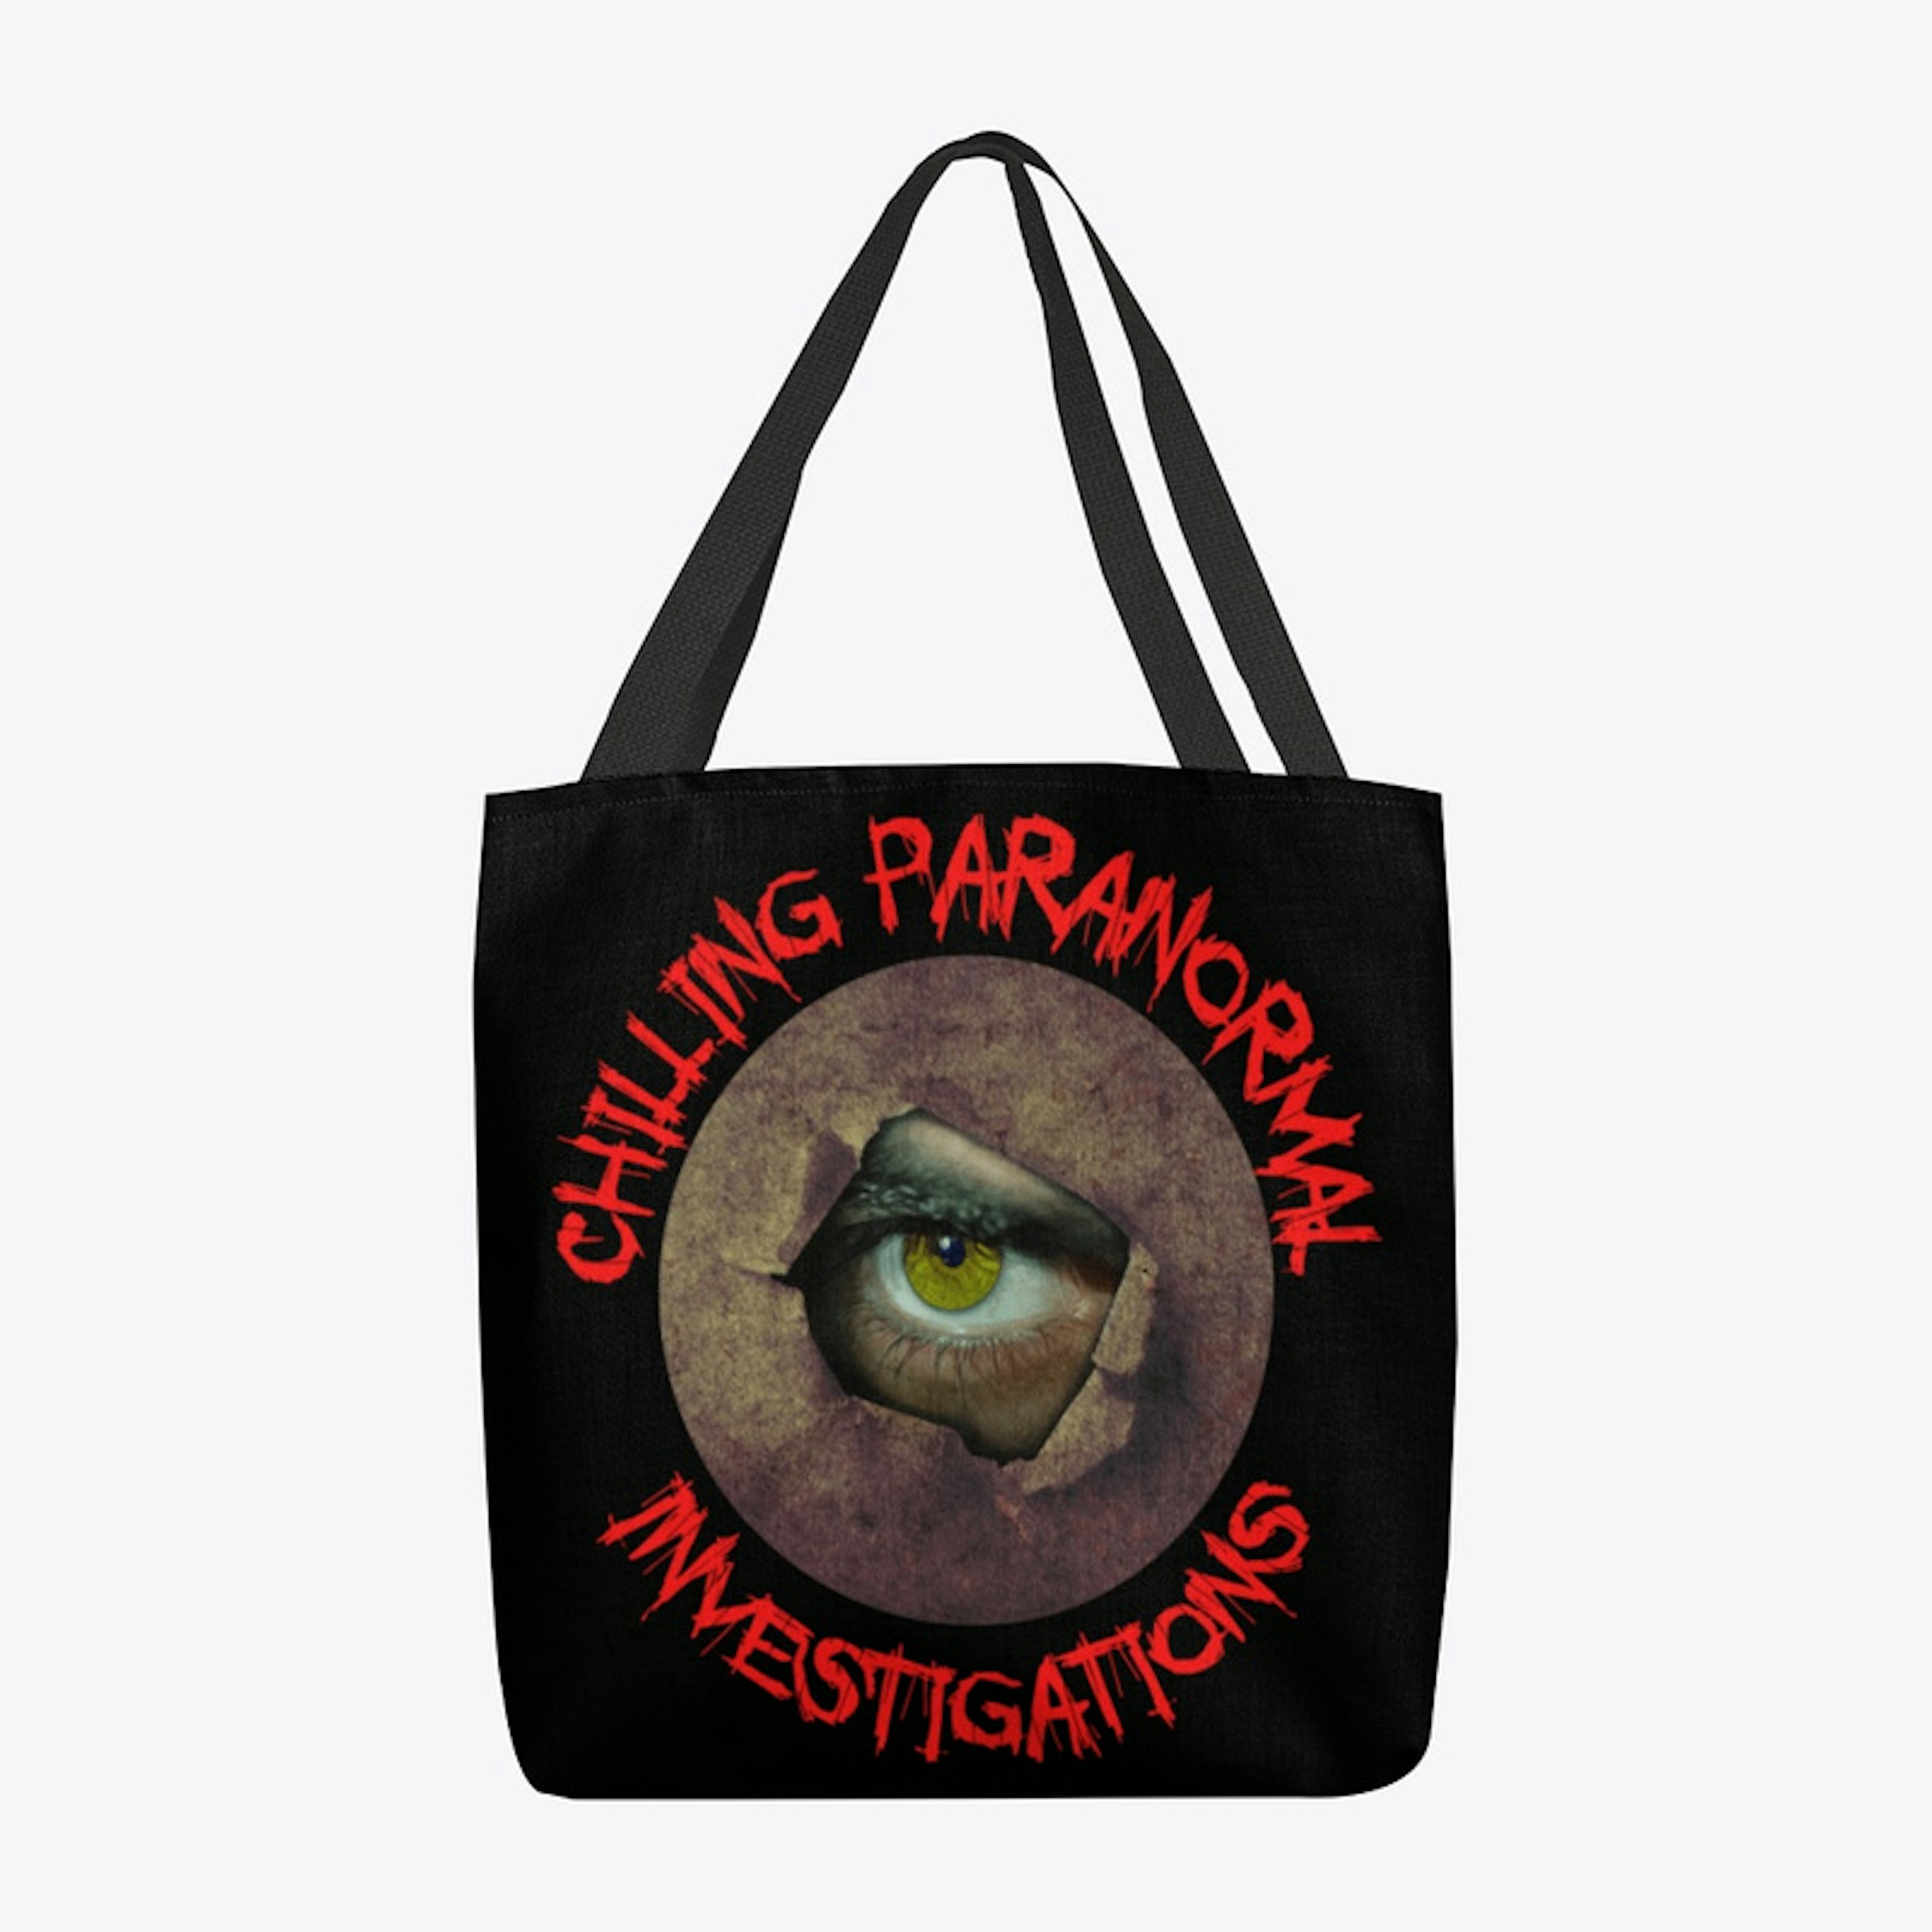 Chilling Paranormal Tote Bag